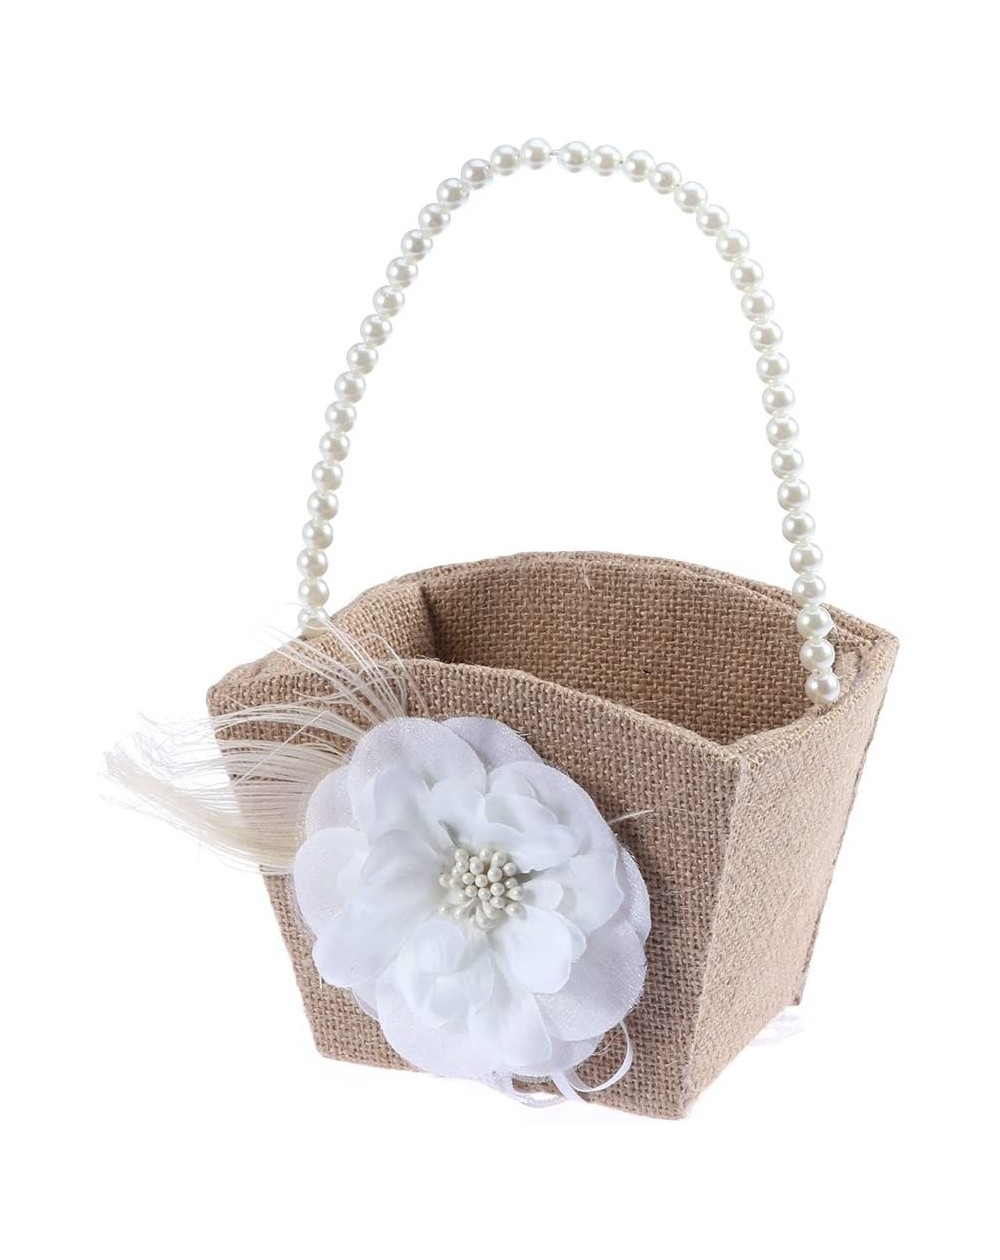 Ceremony Supplies Wedding Flower Girl Basket with White Pearl Ribbon Flower - CC12KZCXL69 $30.48